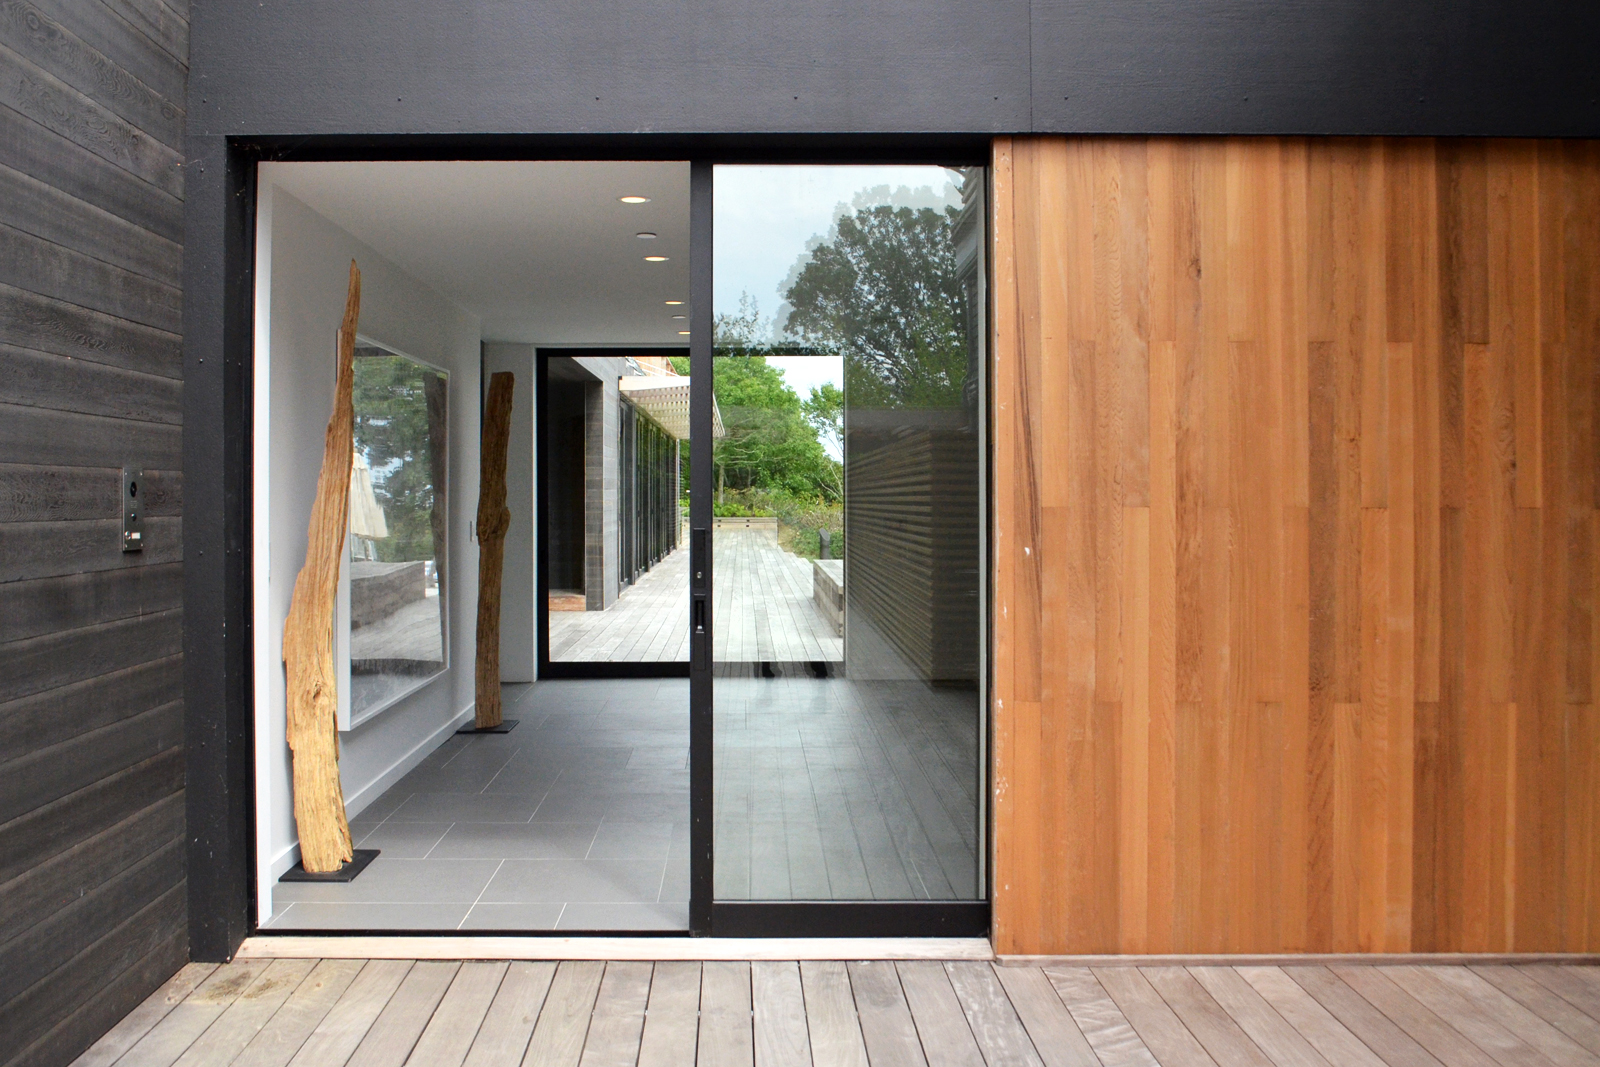 res4-resolution-4-architecture-modern-modular-house-prefab-amagansett-addition-exterior-interior-door.jpg